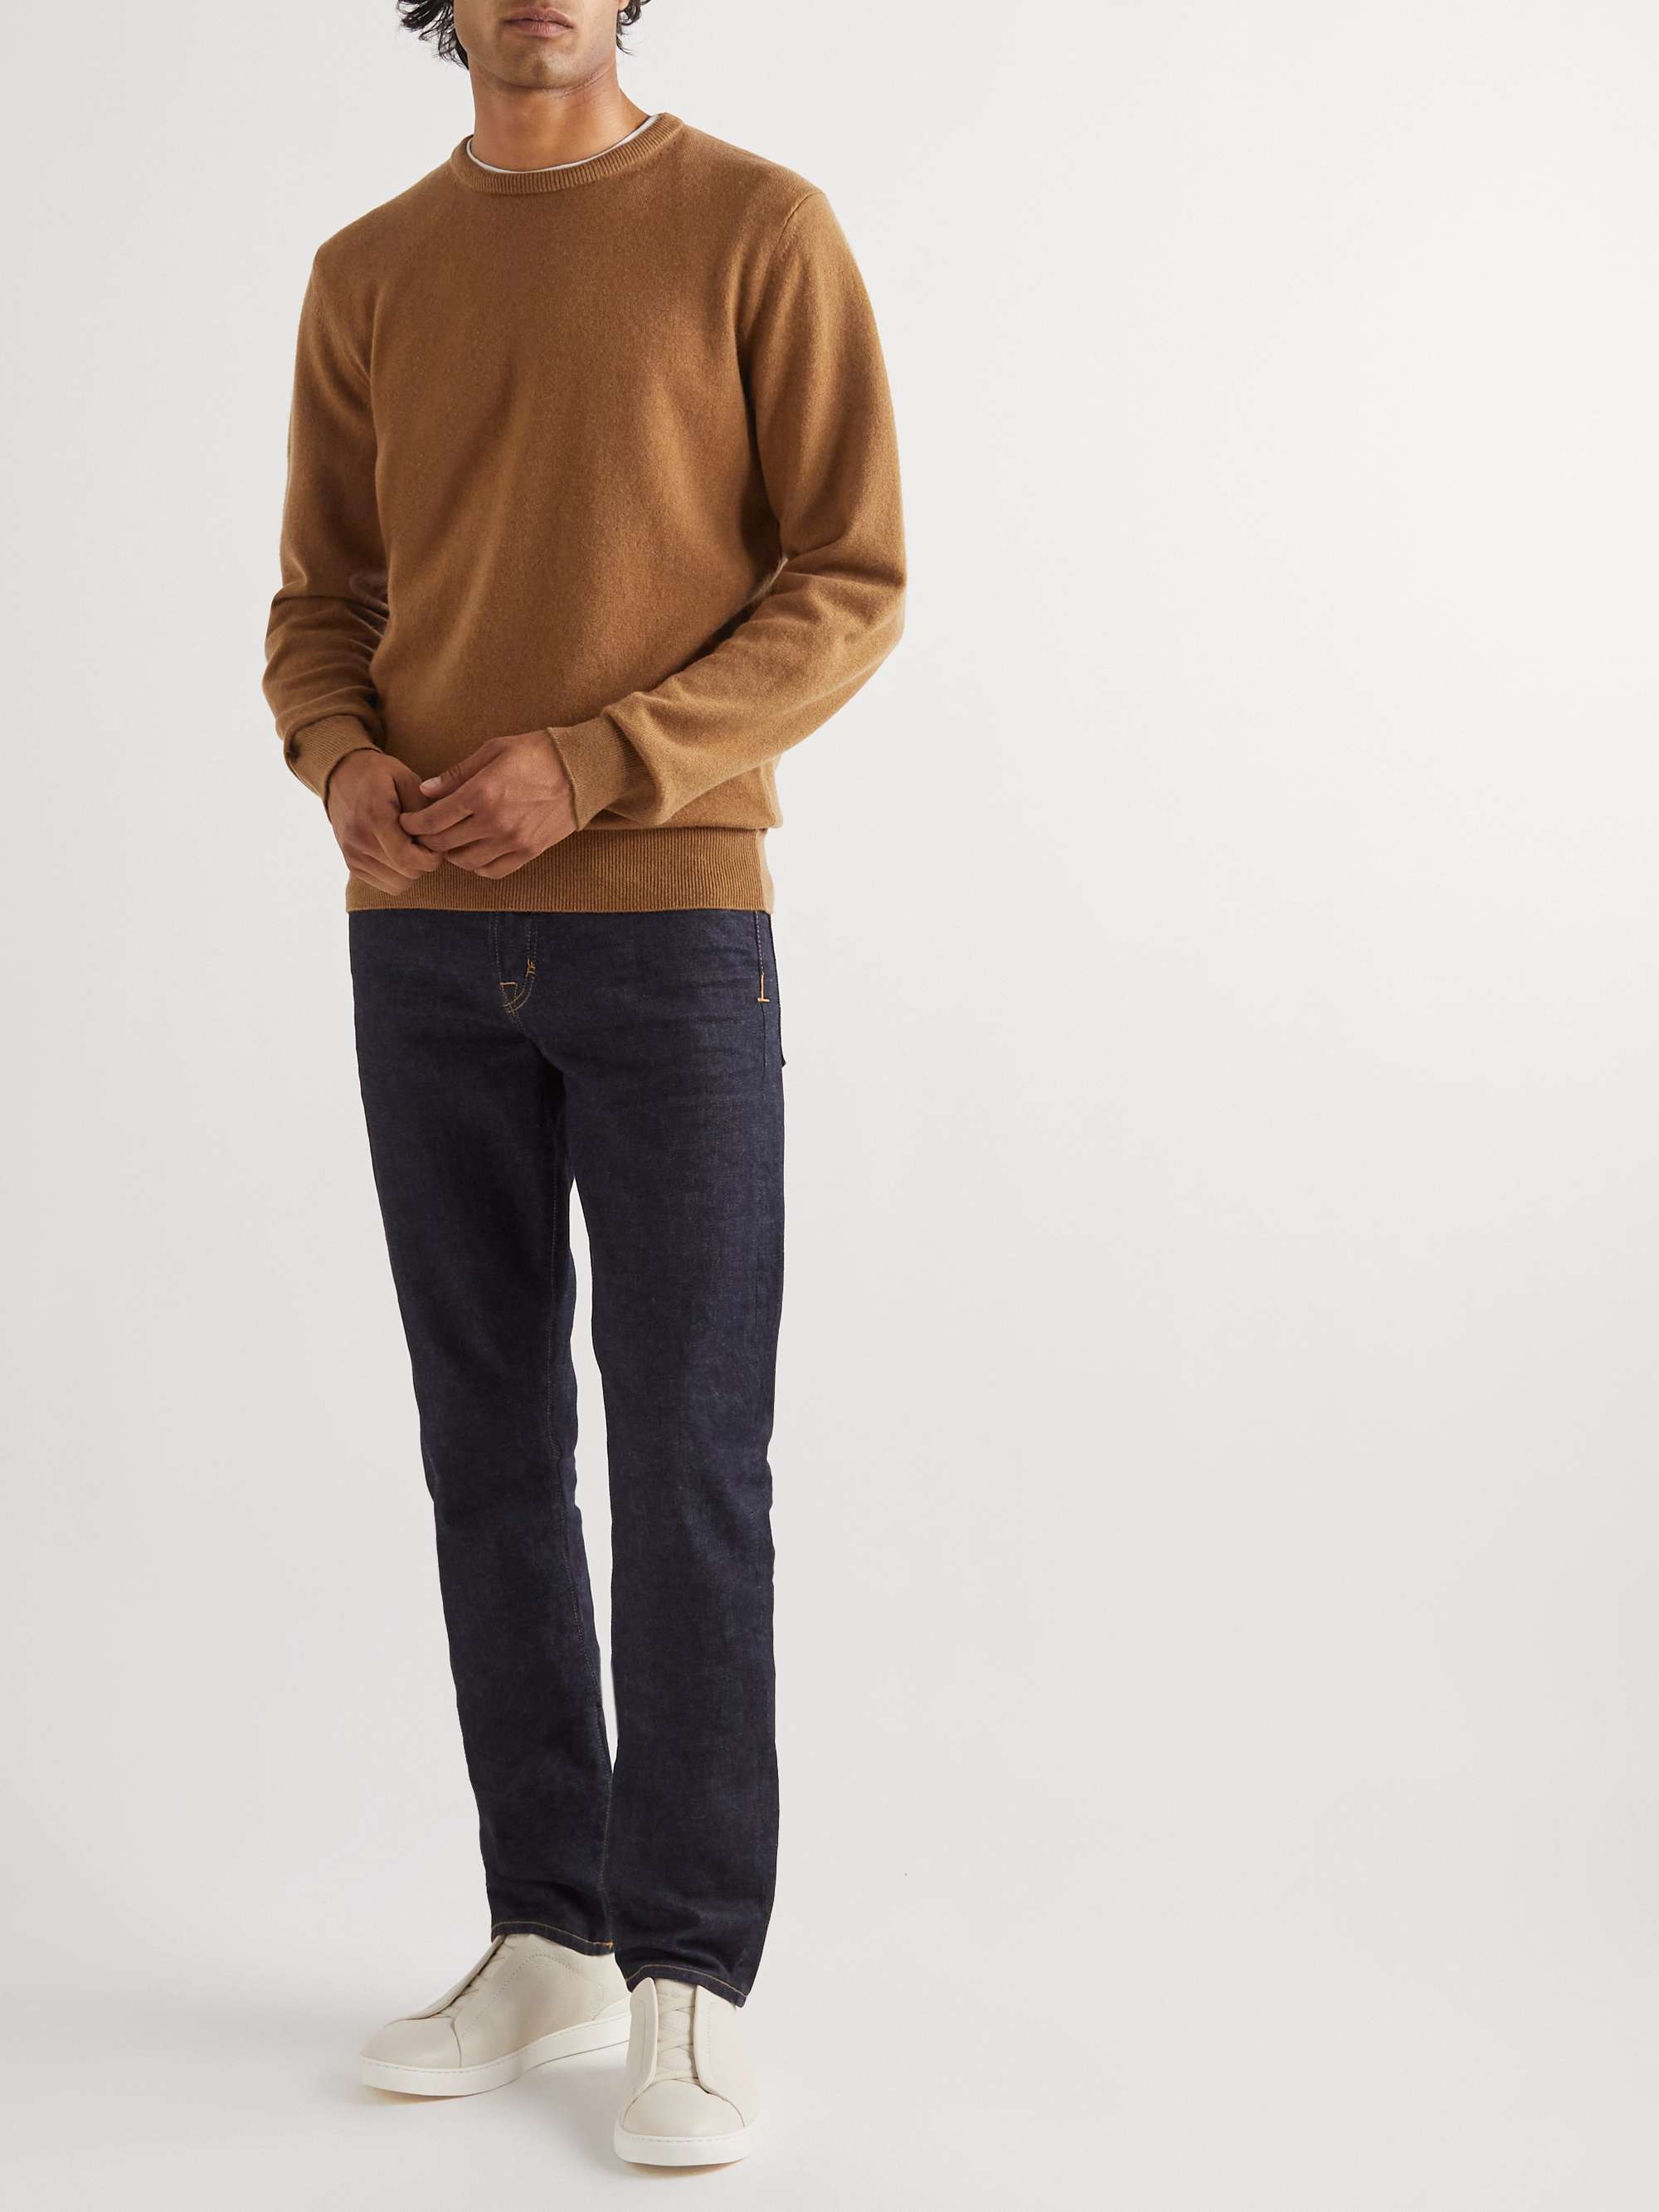 ZEGNA Slim-Fit Cashmere Sweater